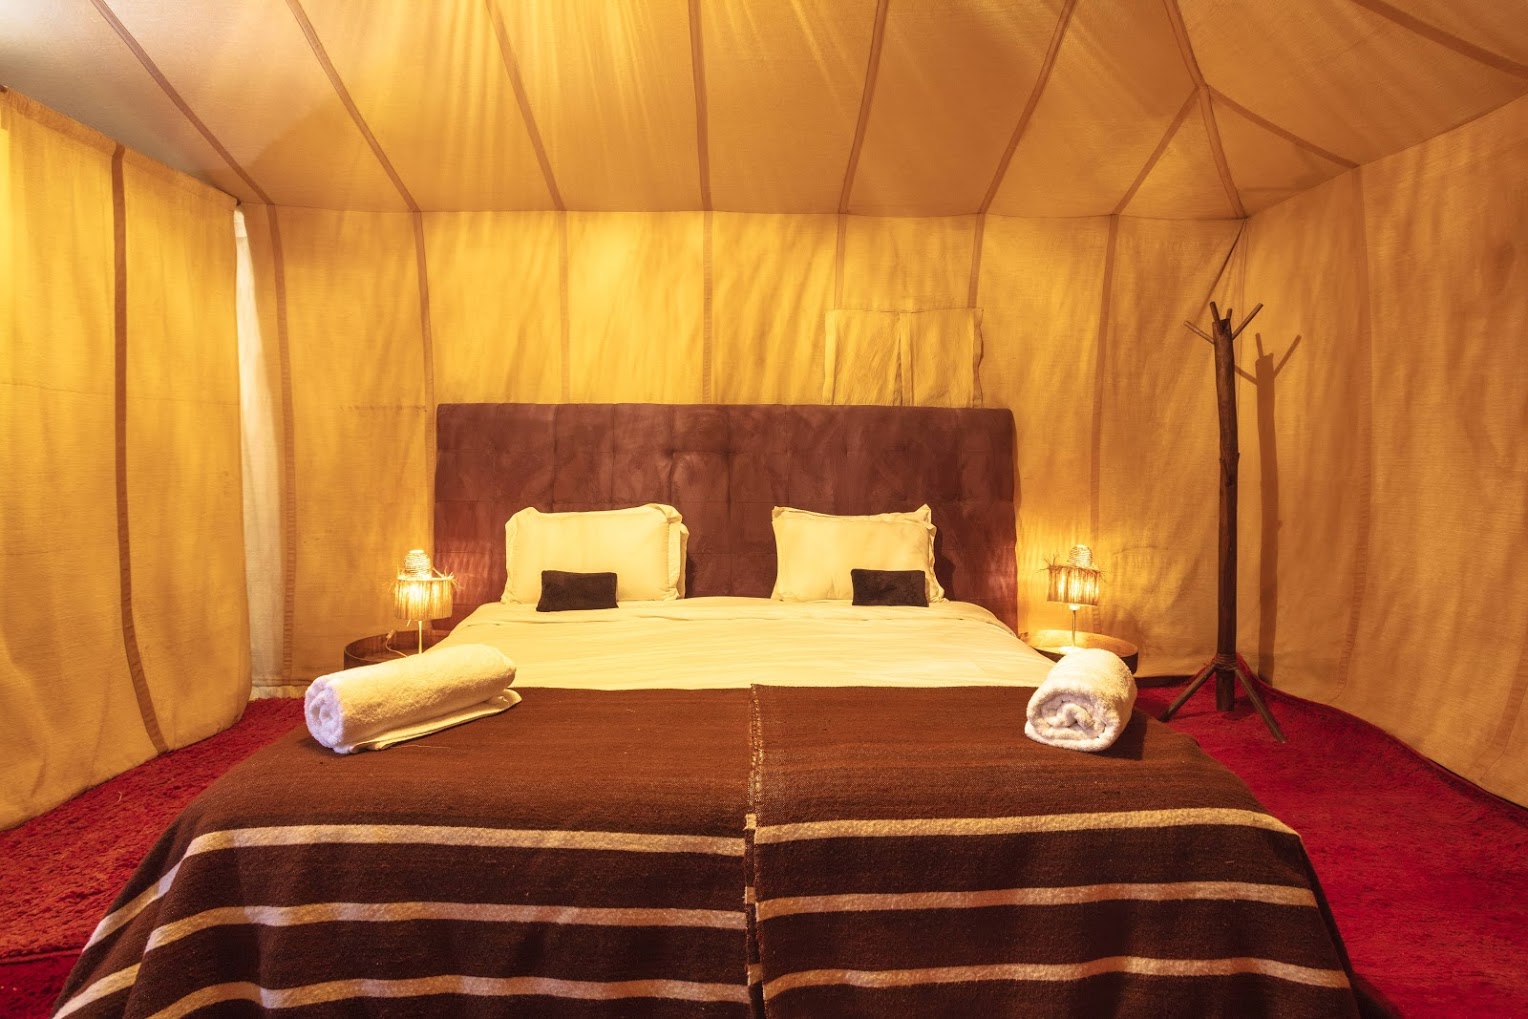 Erg chigaga comfortable camp in the desert torza